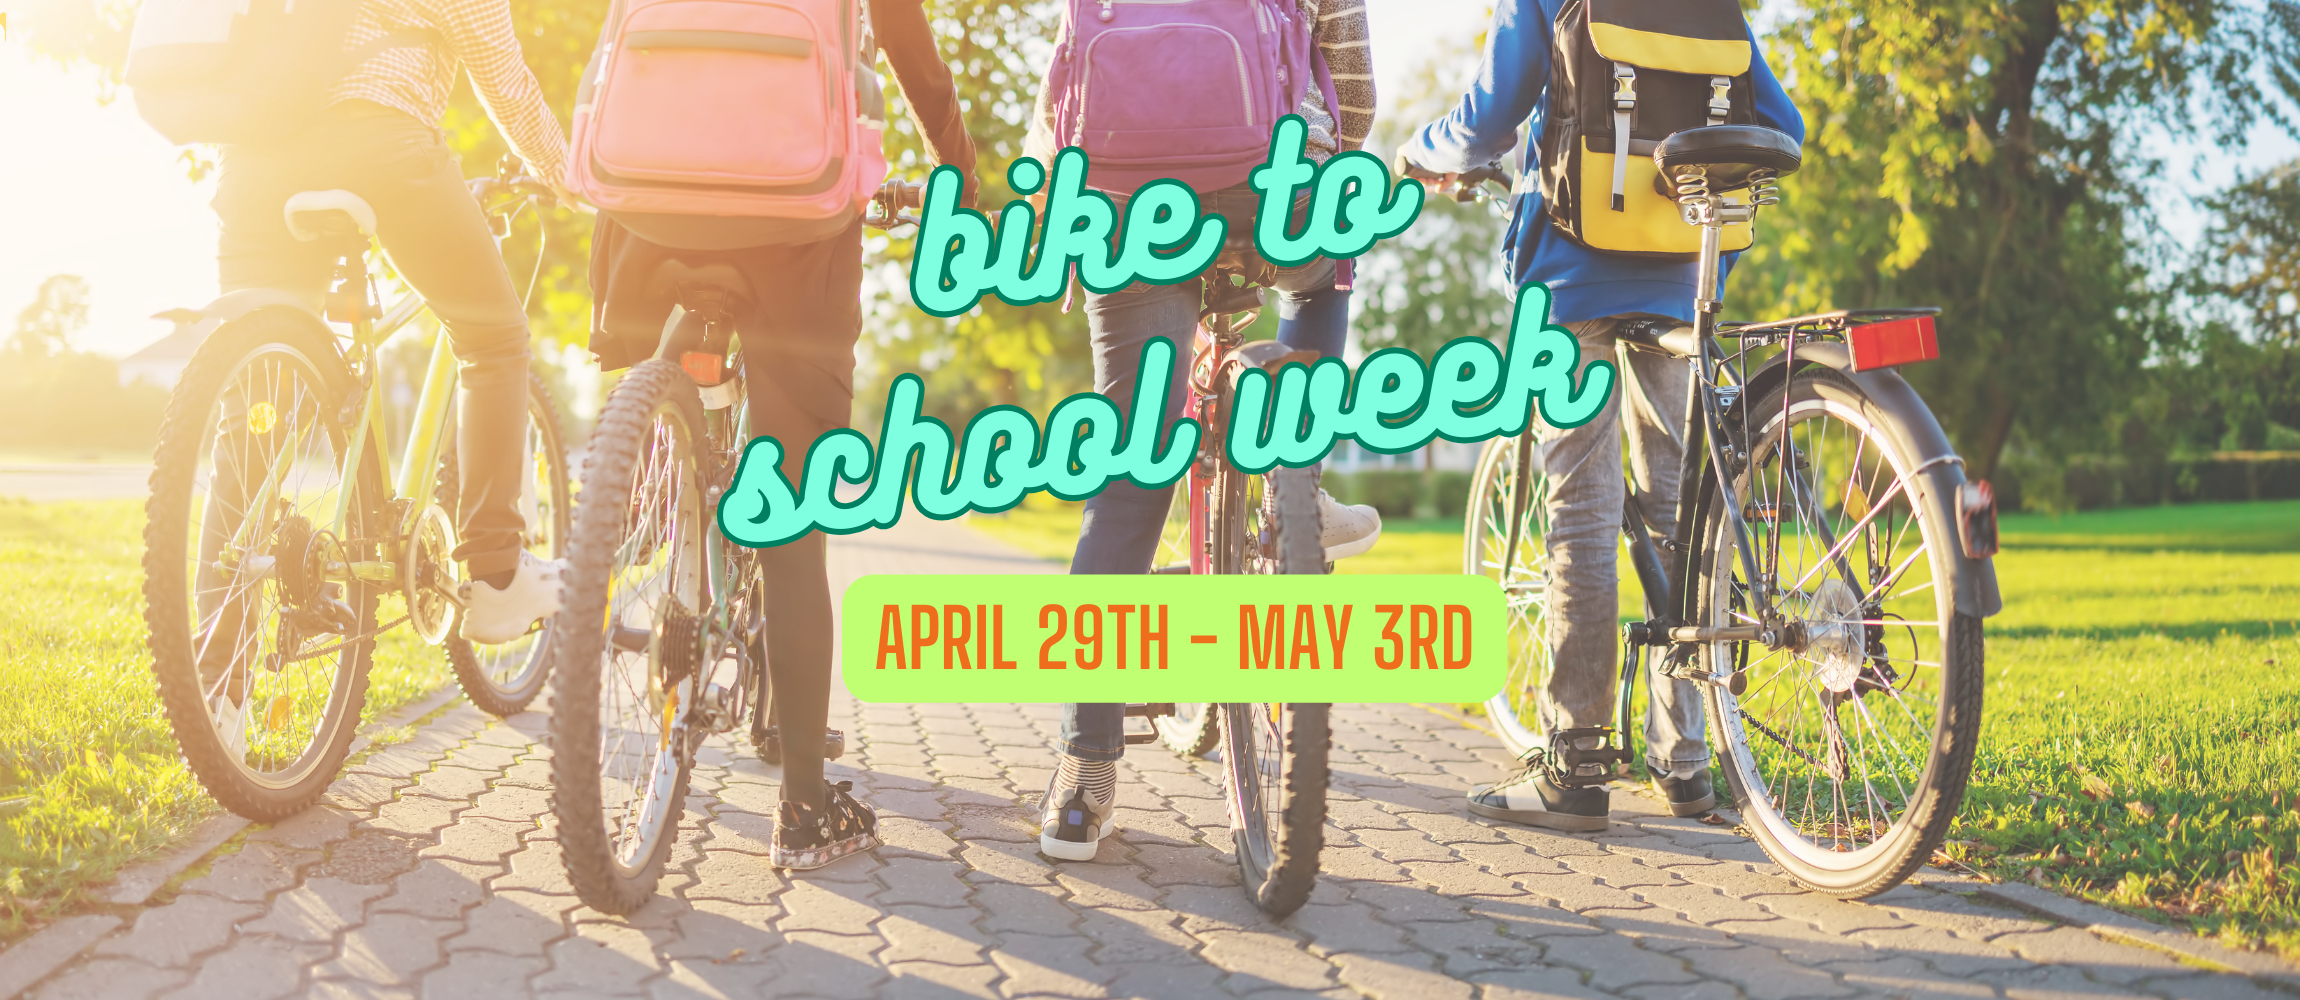 Bike to School Week Appril 29th - May 3rd